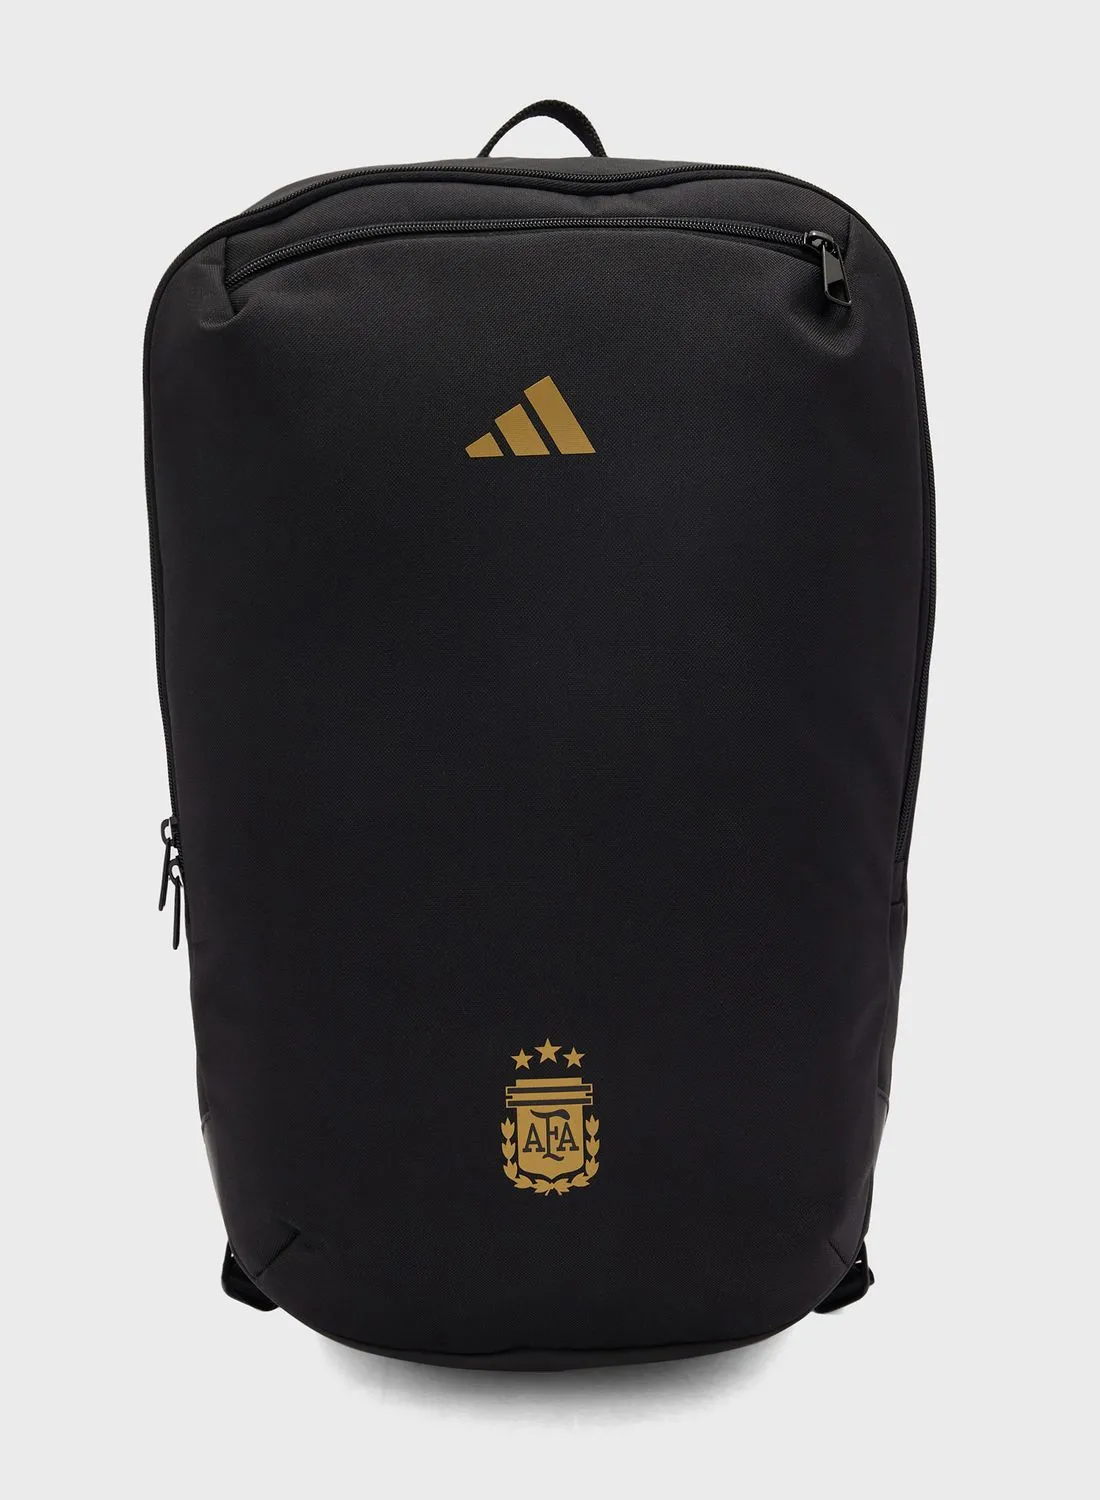 Adidas Argentine Football Association Backpack